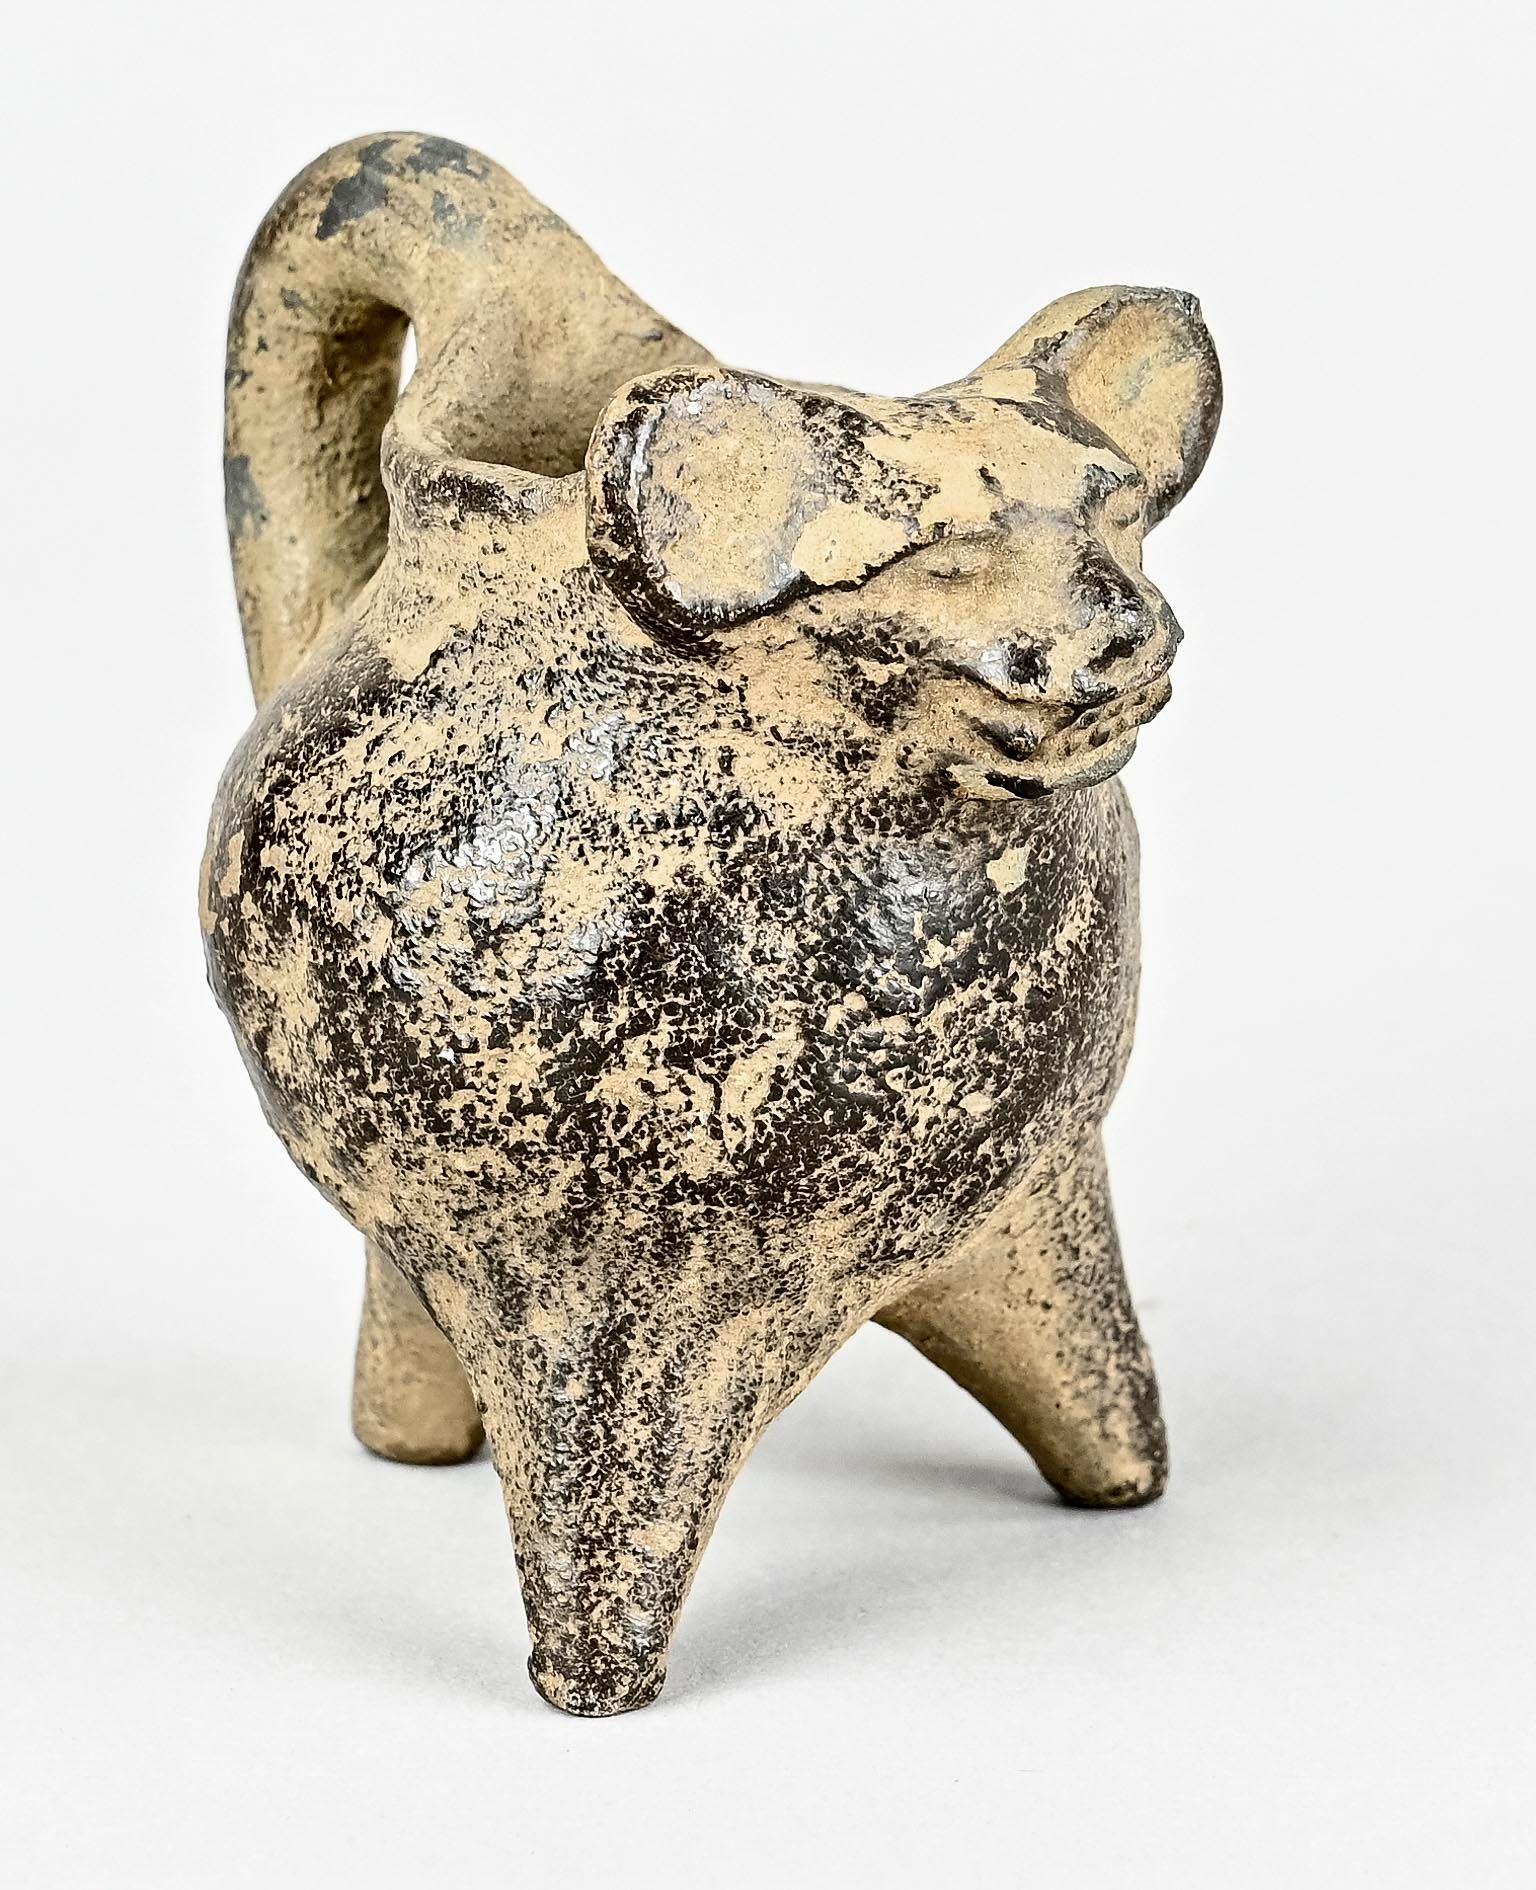 Null 3条腿的壶，有一个带大耳朵的动物头颅作为顶饰（飞狐？）


烧制粘土，高10 x 9厘米